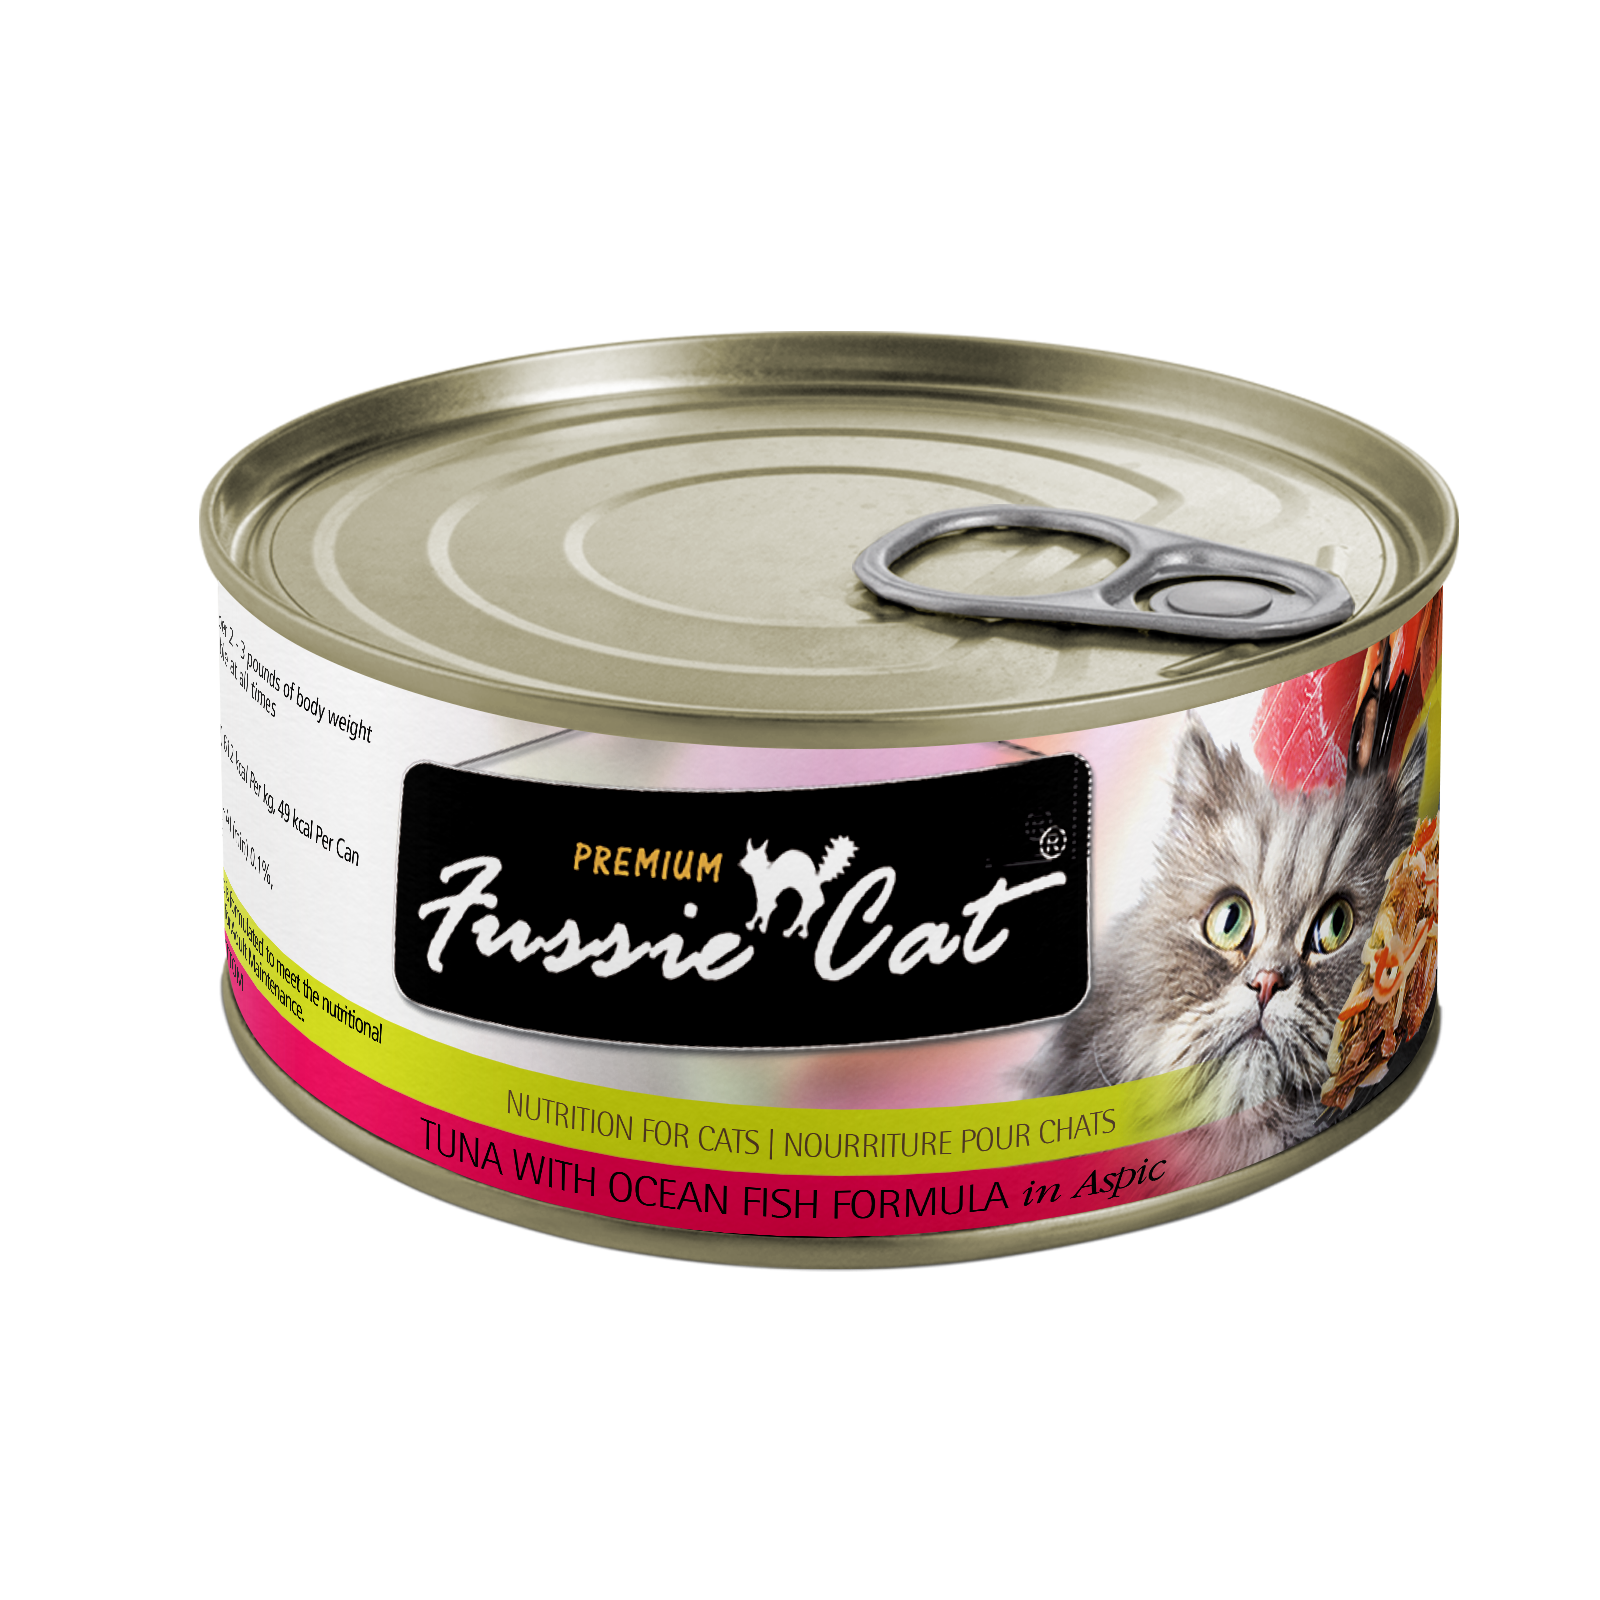 Fussie Cat Tuna with Oceanfish in Aspic Wet Cat Food